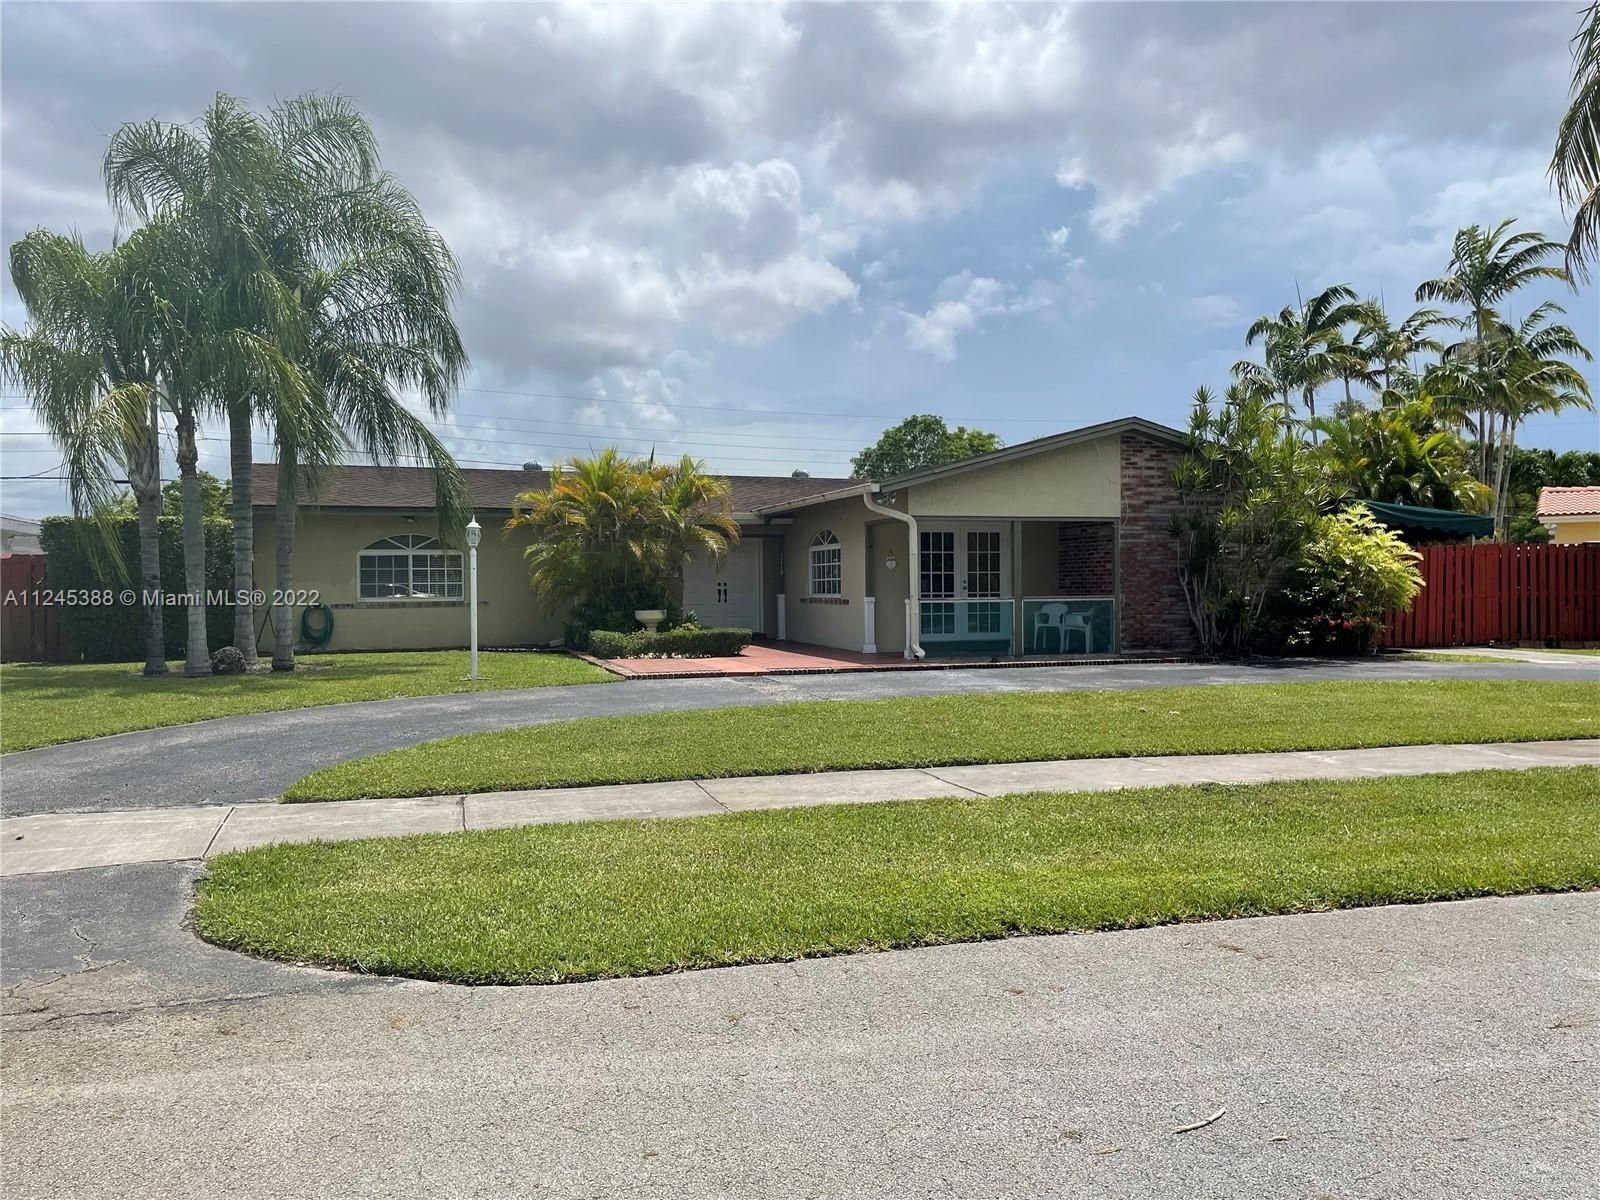 Real estate property located at 3710 124th Ct, Miami-Dade County, Miami, FL